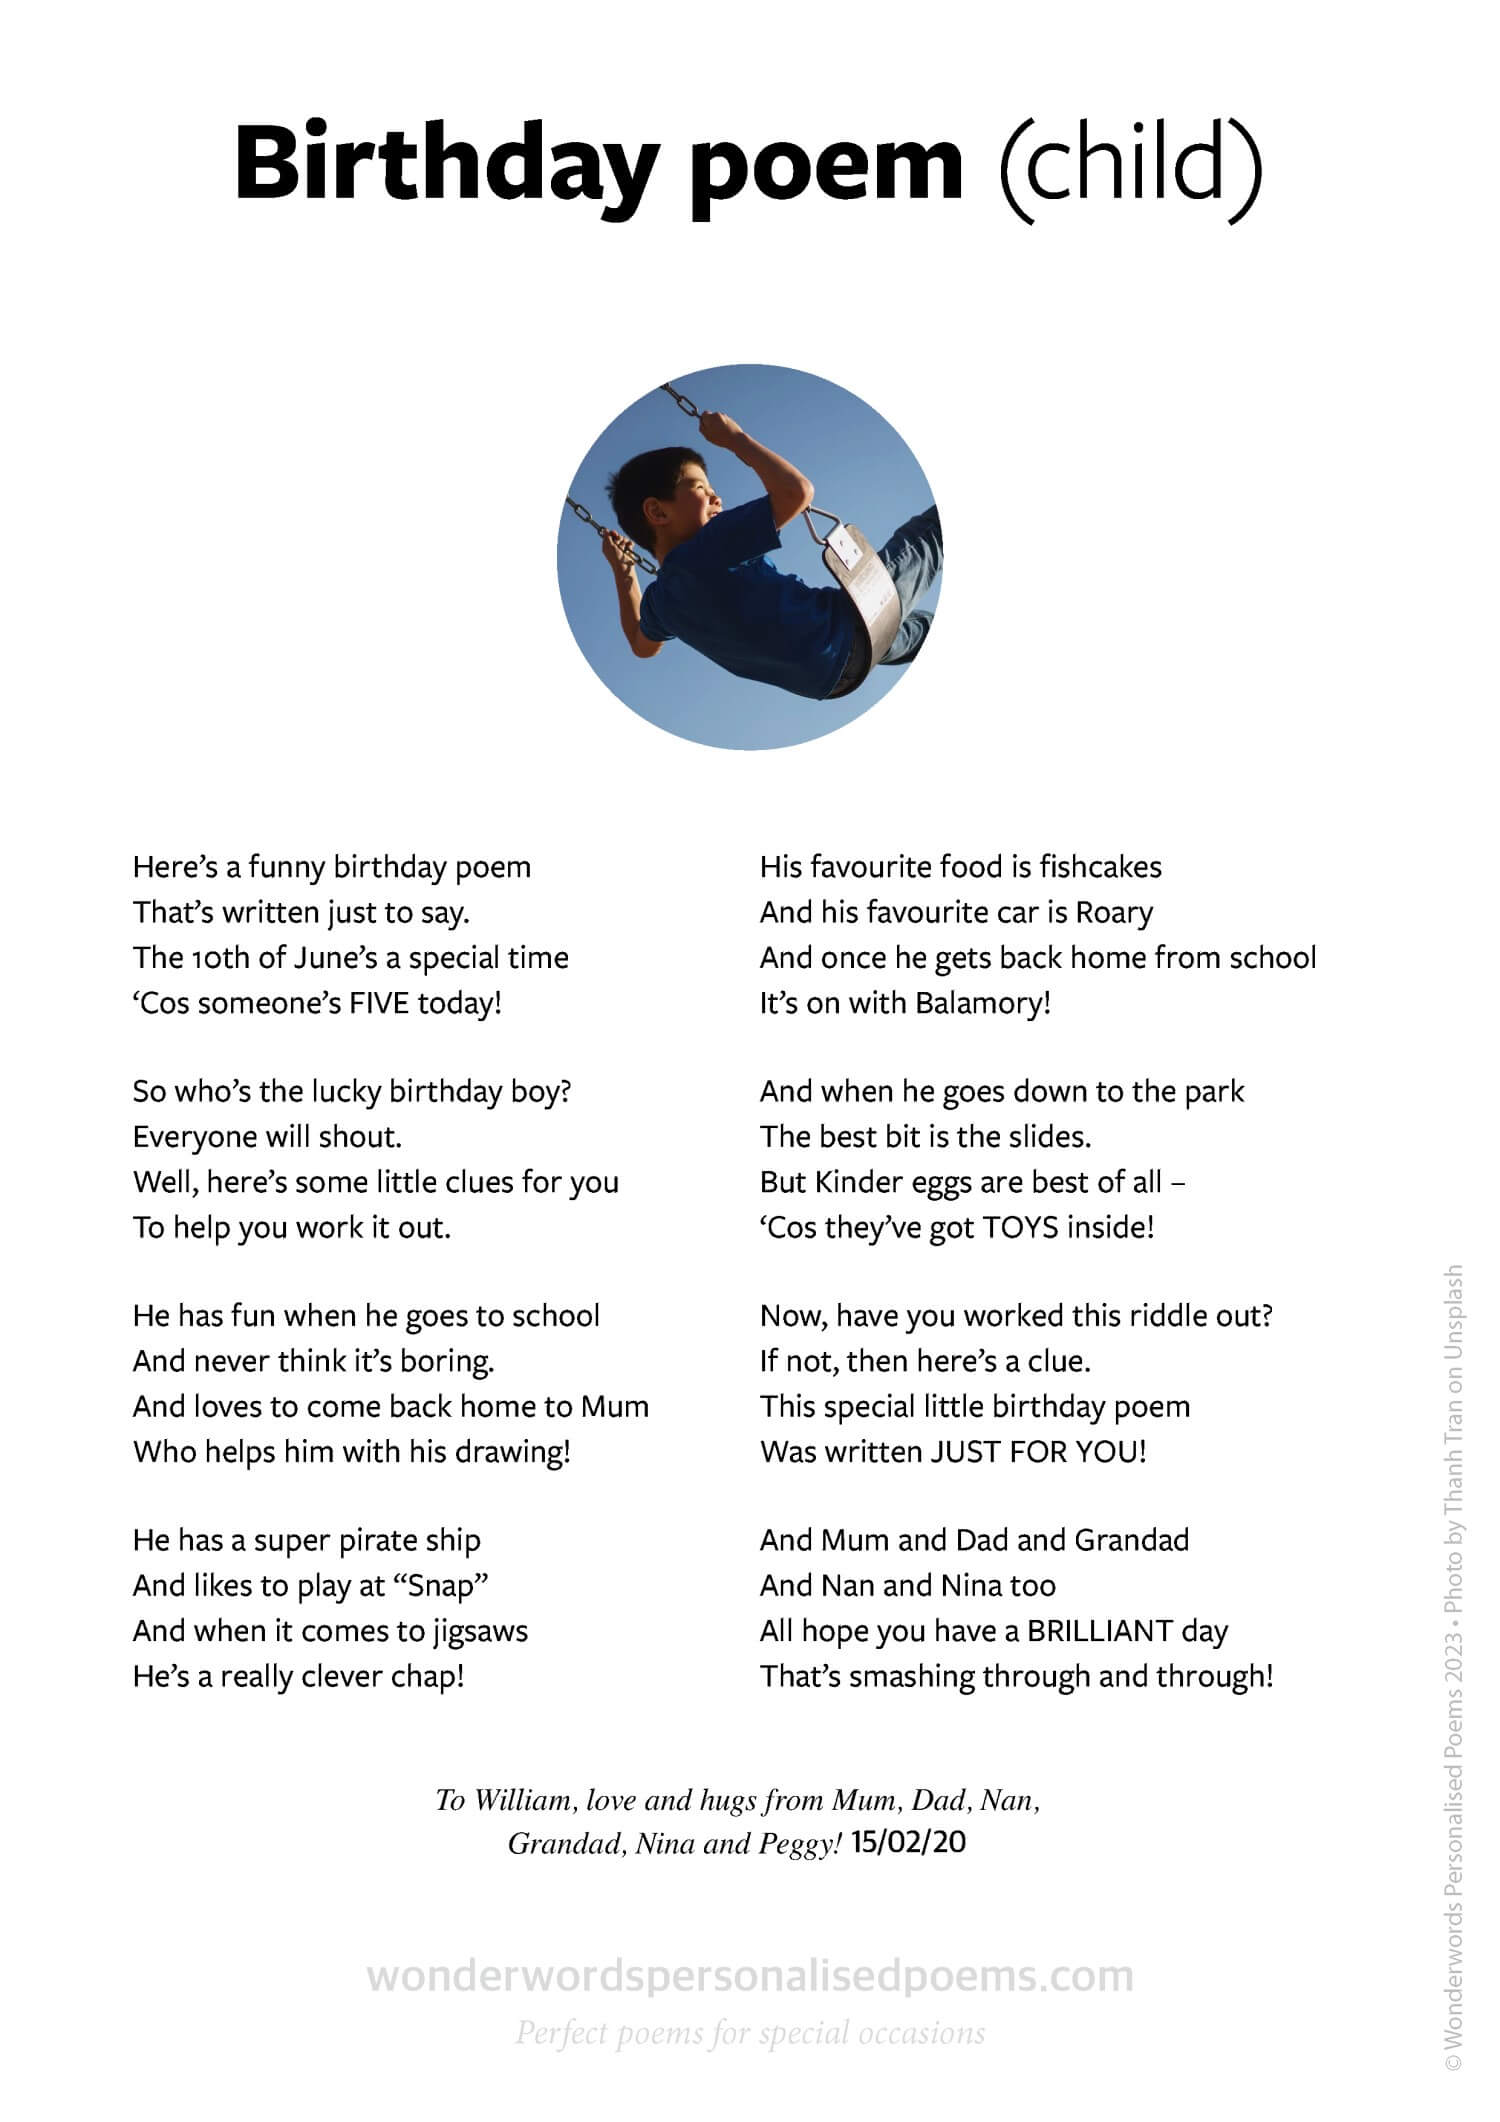 A sample child's birthday poem from Wonderwords Personalised Poems